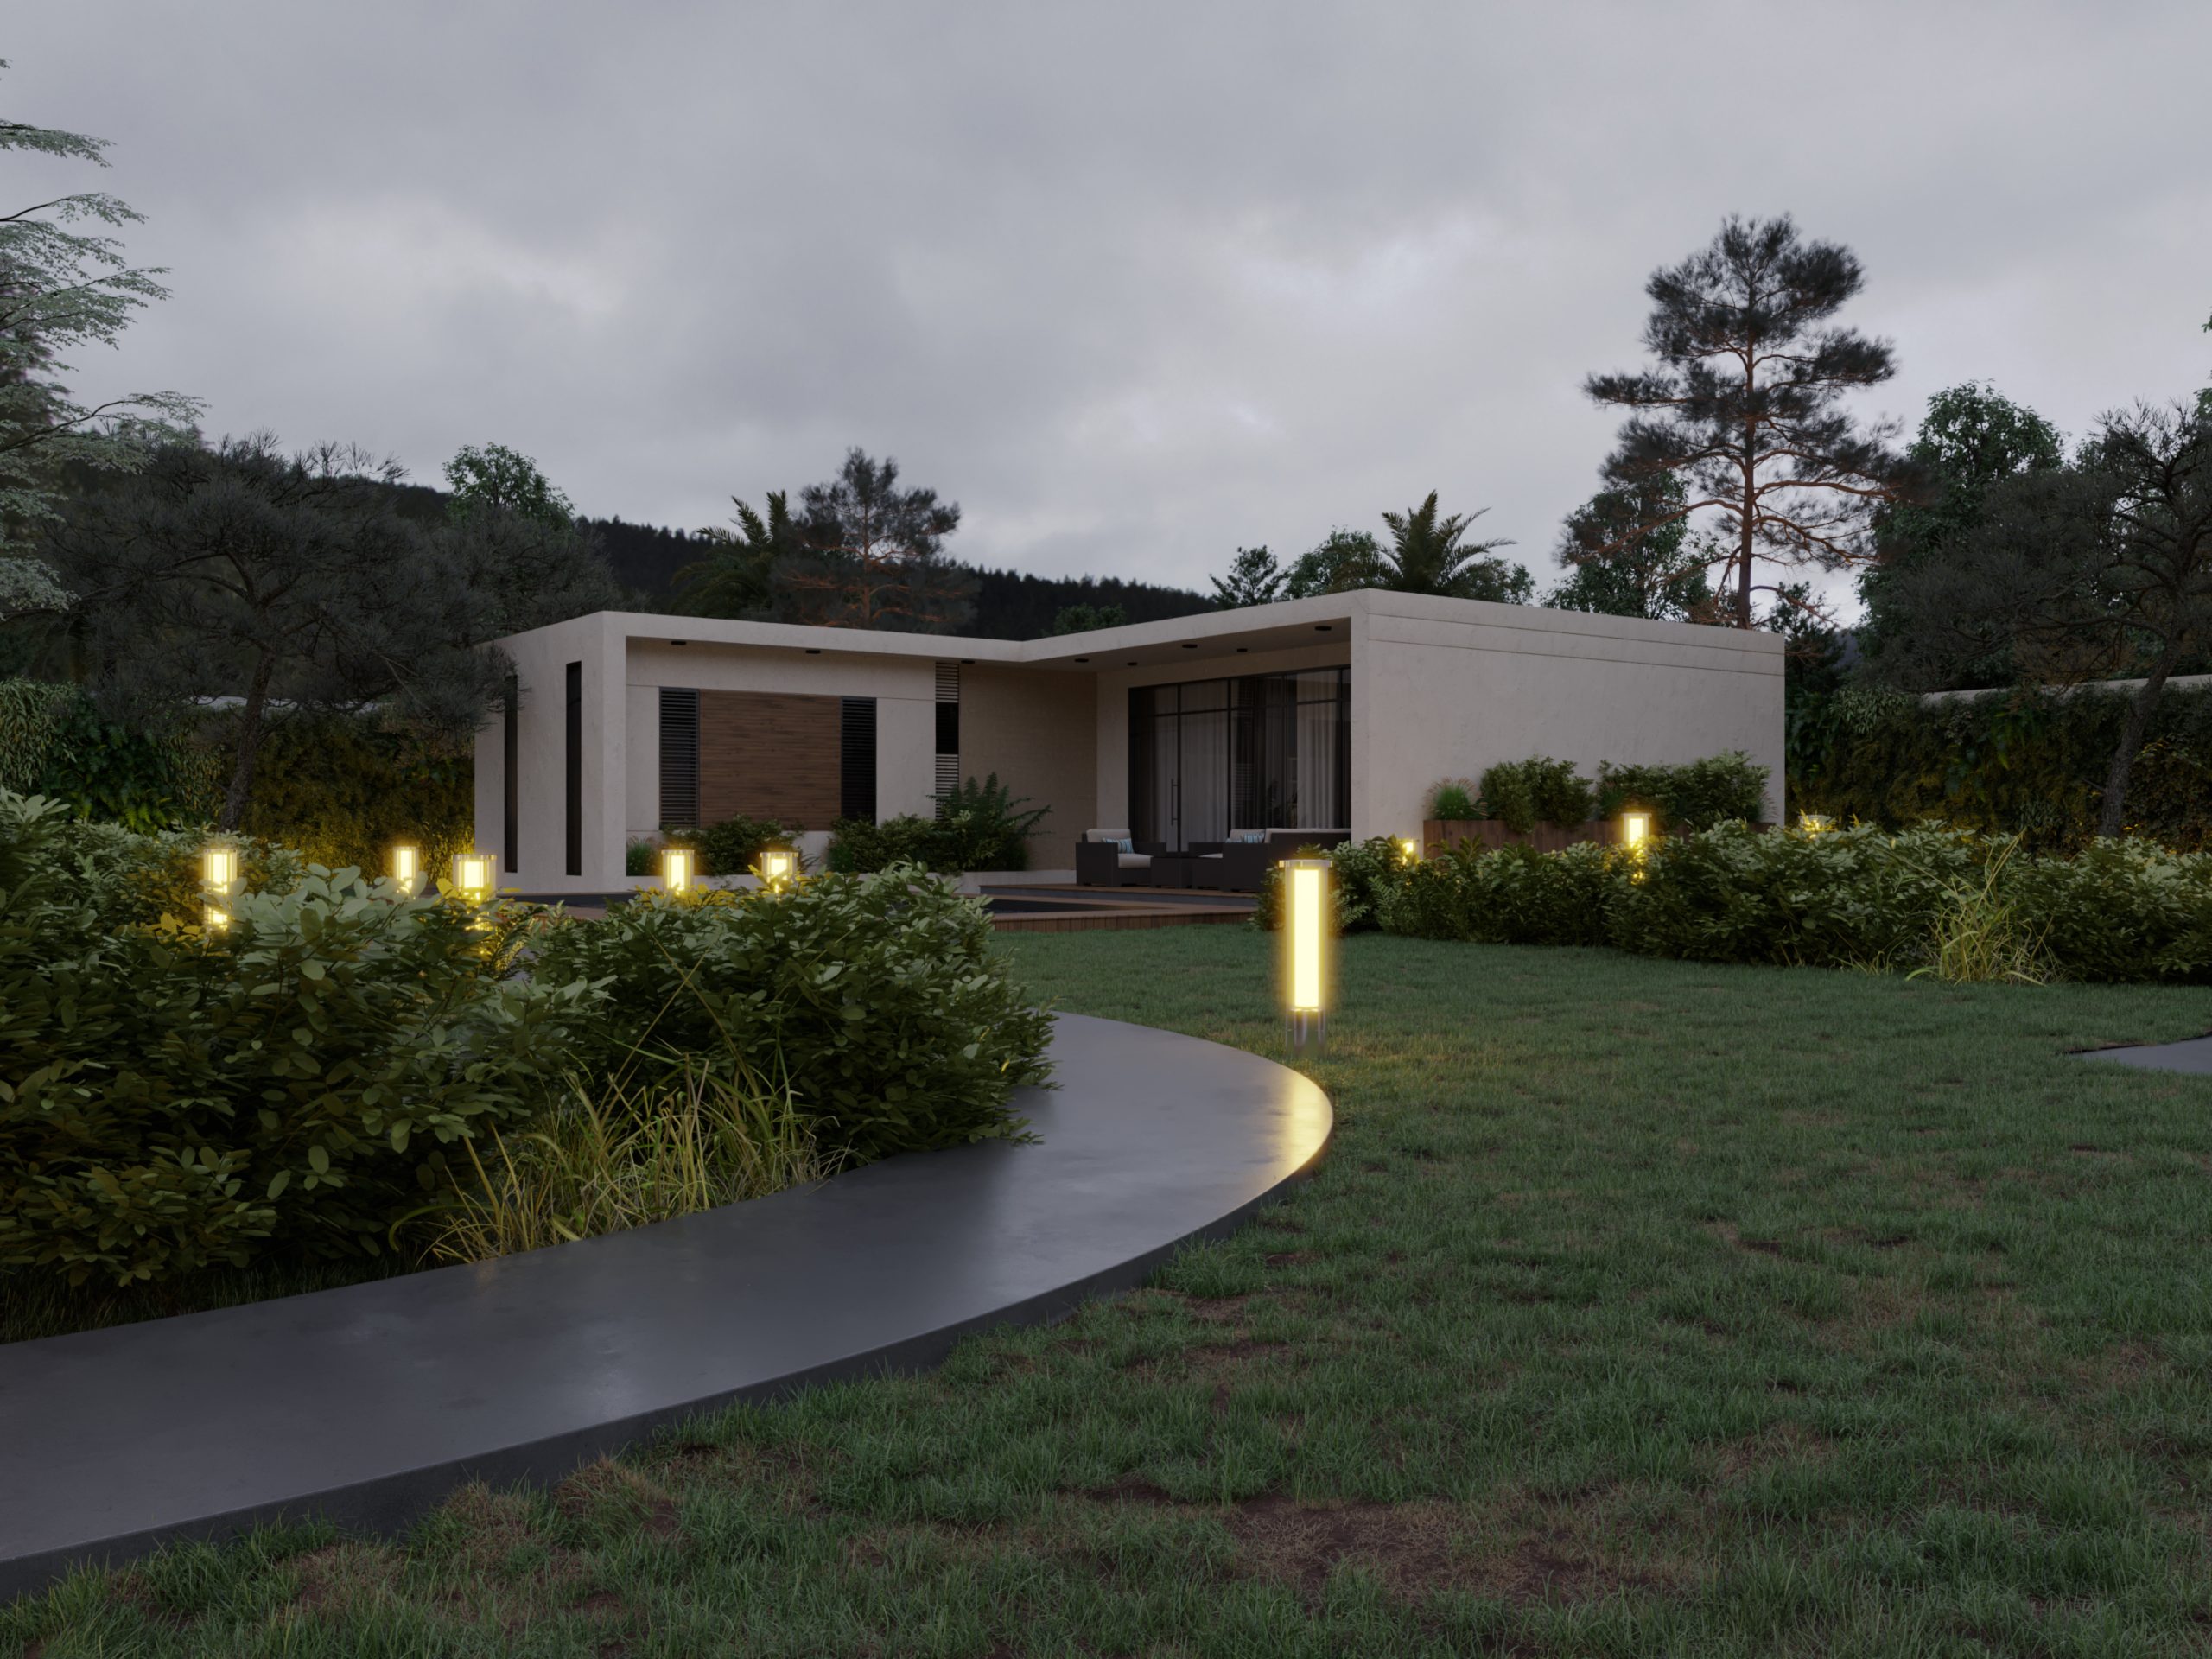 VILLA EXTERIOR AND LANDSCAPE - villa - exterior - corridors - garden light